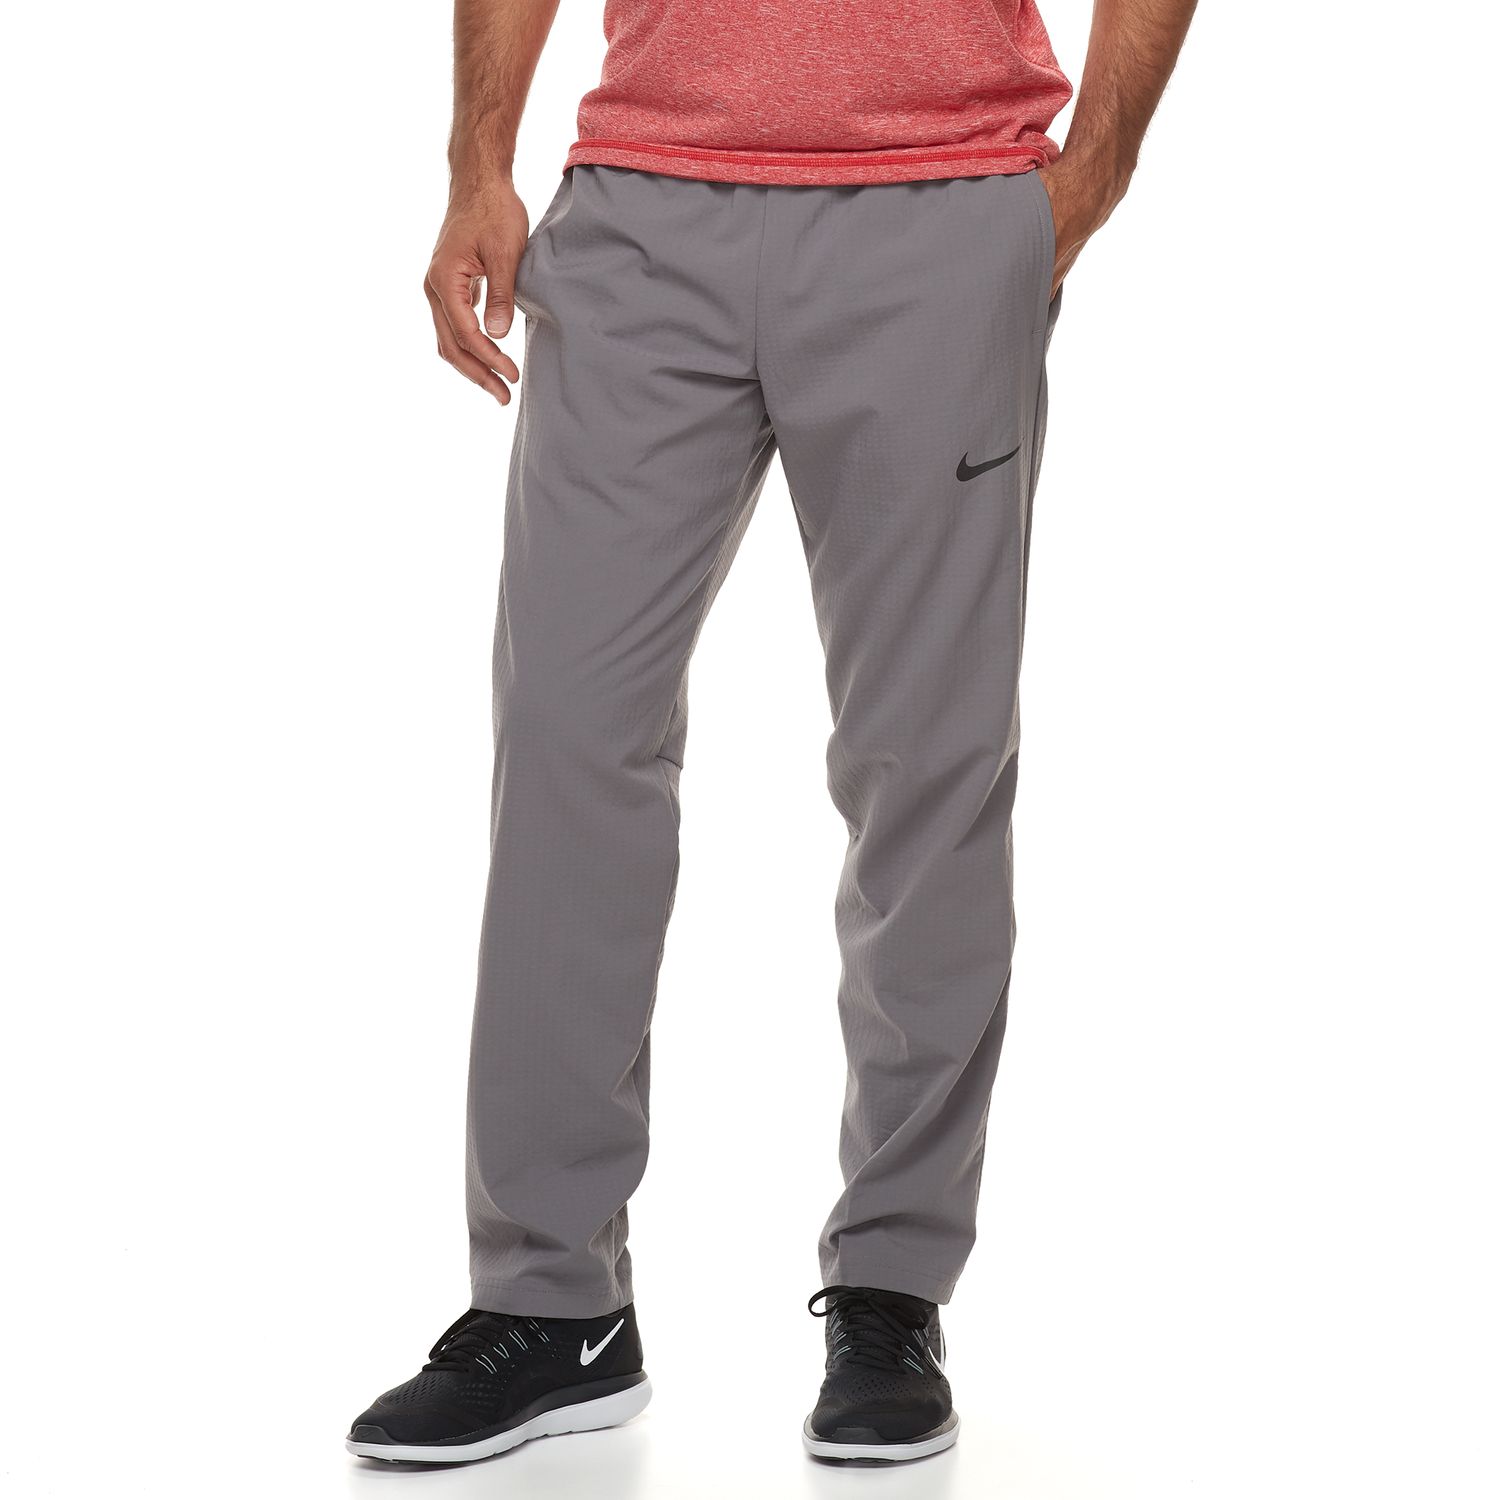 Men's Nike Flex Core Pants